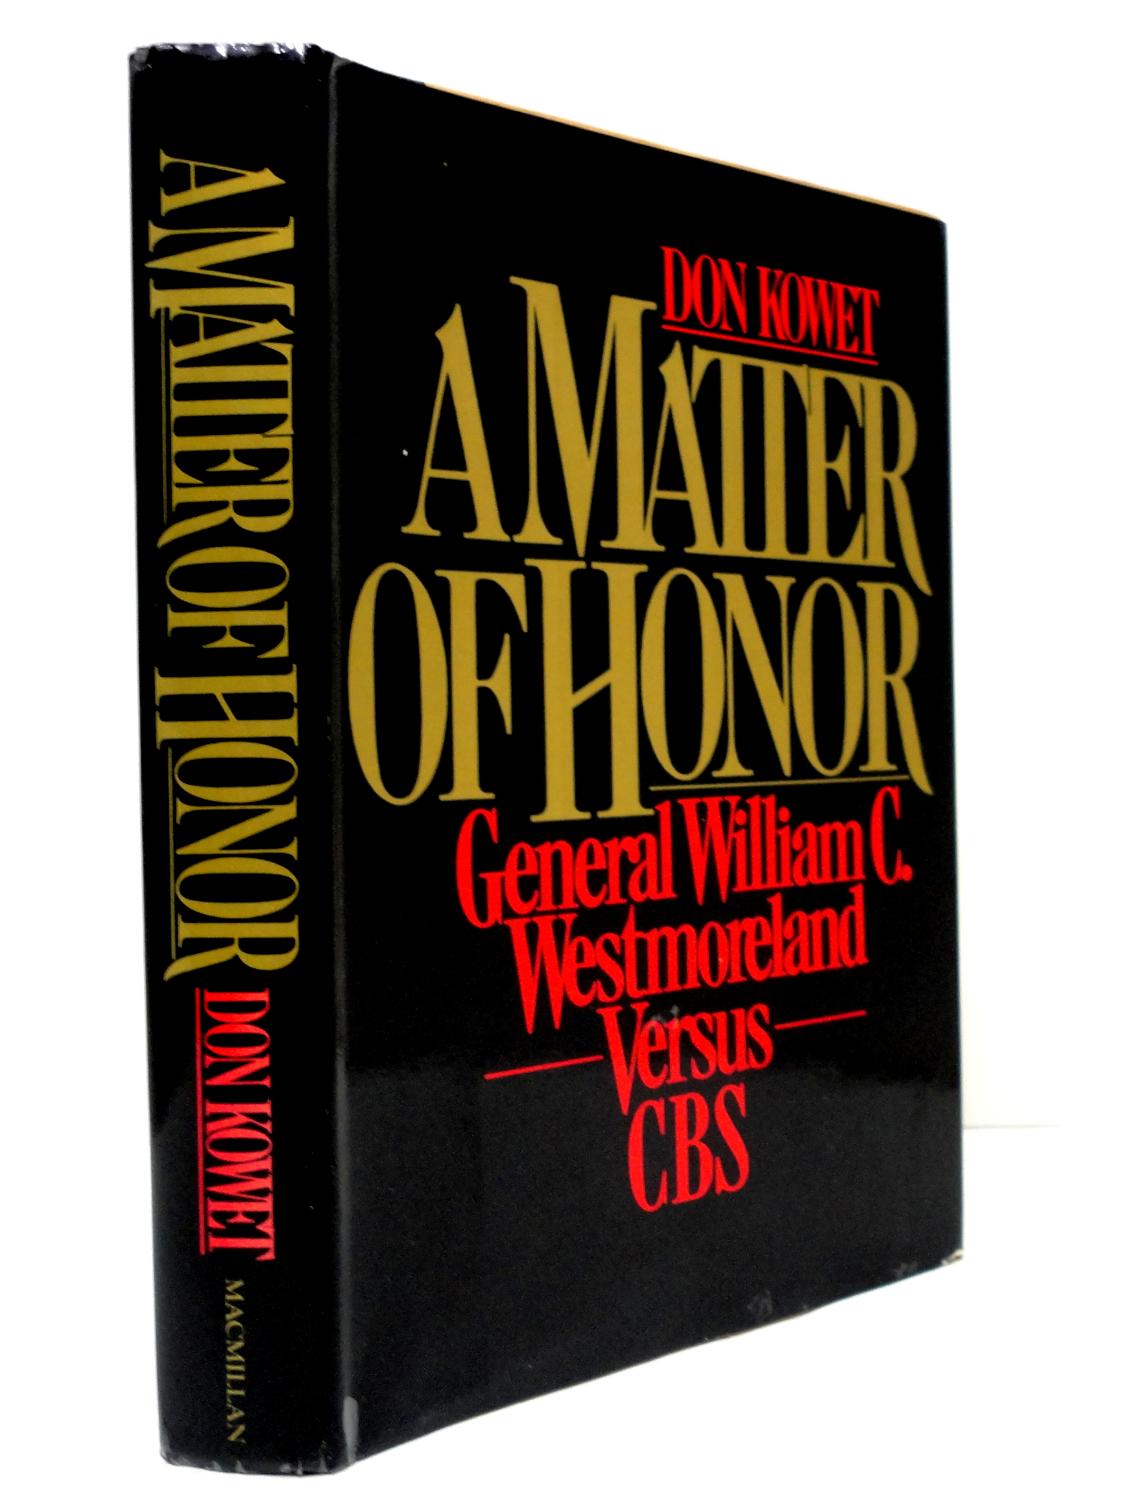 A Matter of Honor: General William C. Westmoreland Versus CBS - Kowet, Don